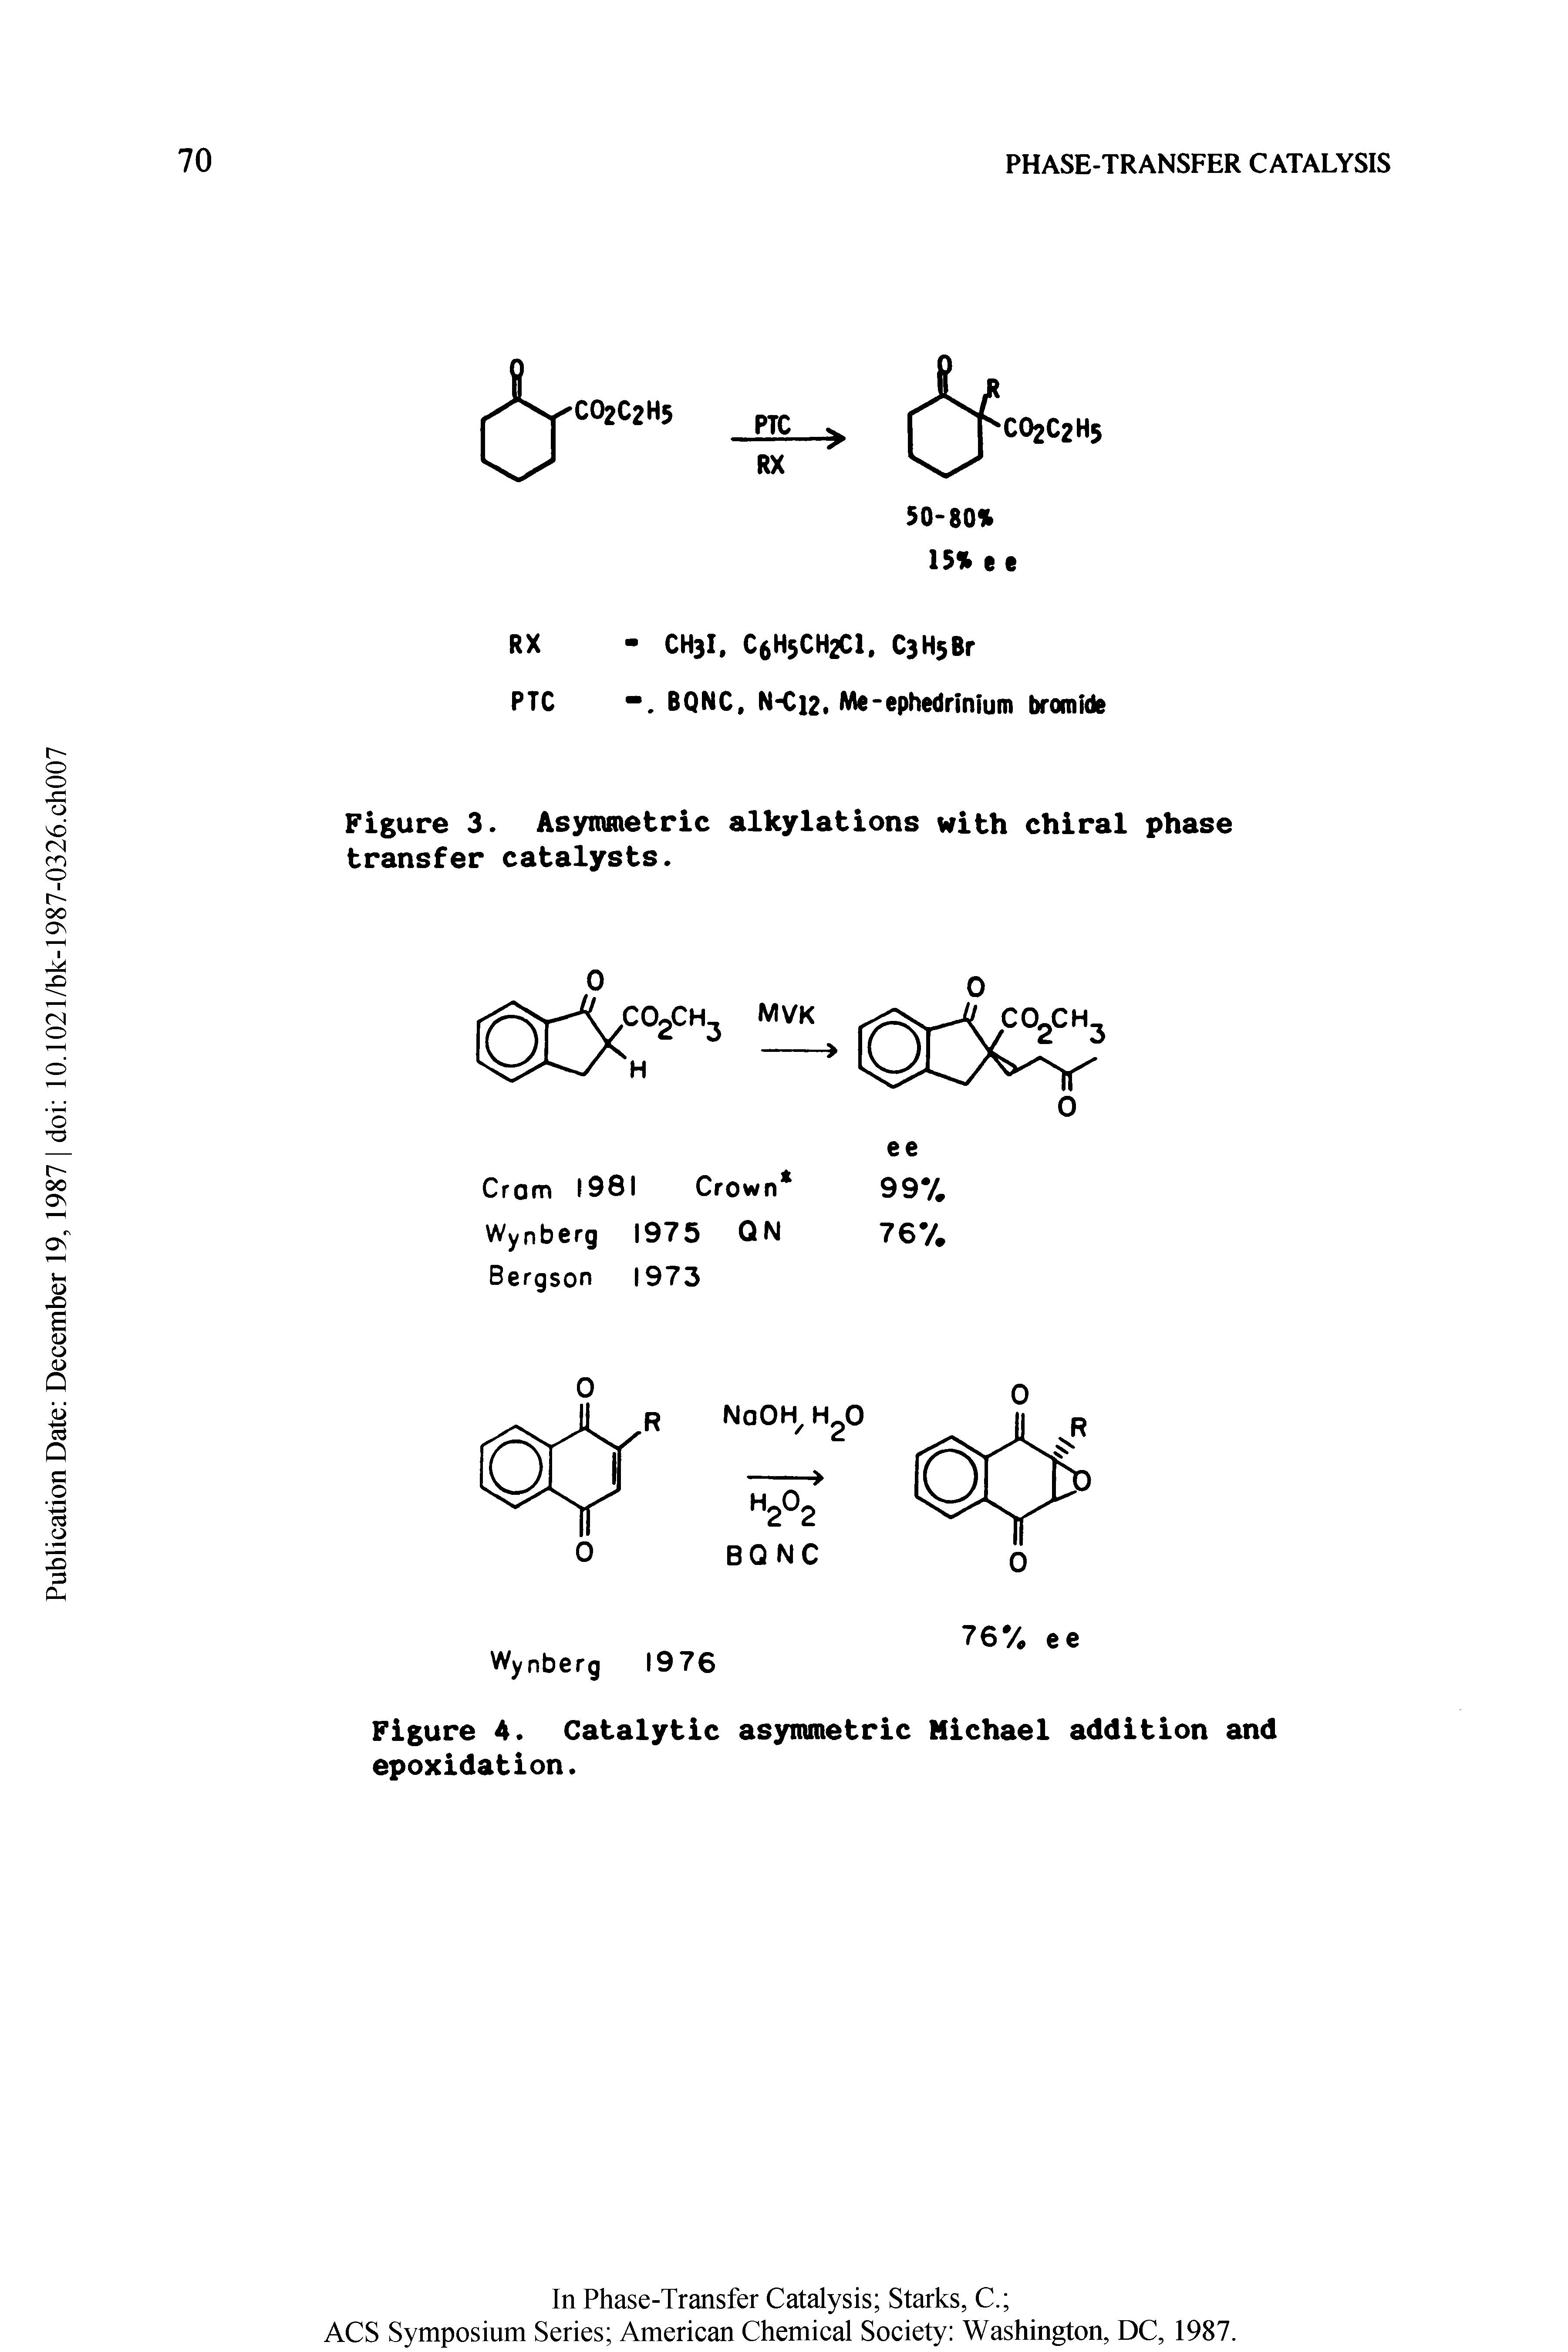 Figure 4. Catalytic asymmetric Michael addition and epoxidation.